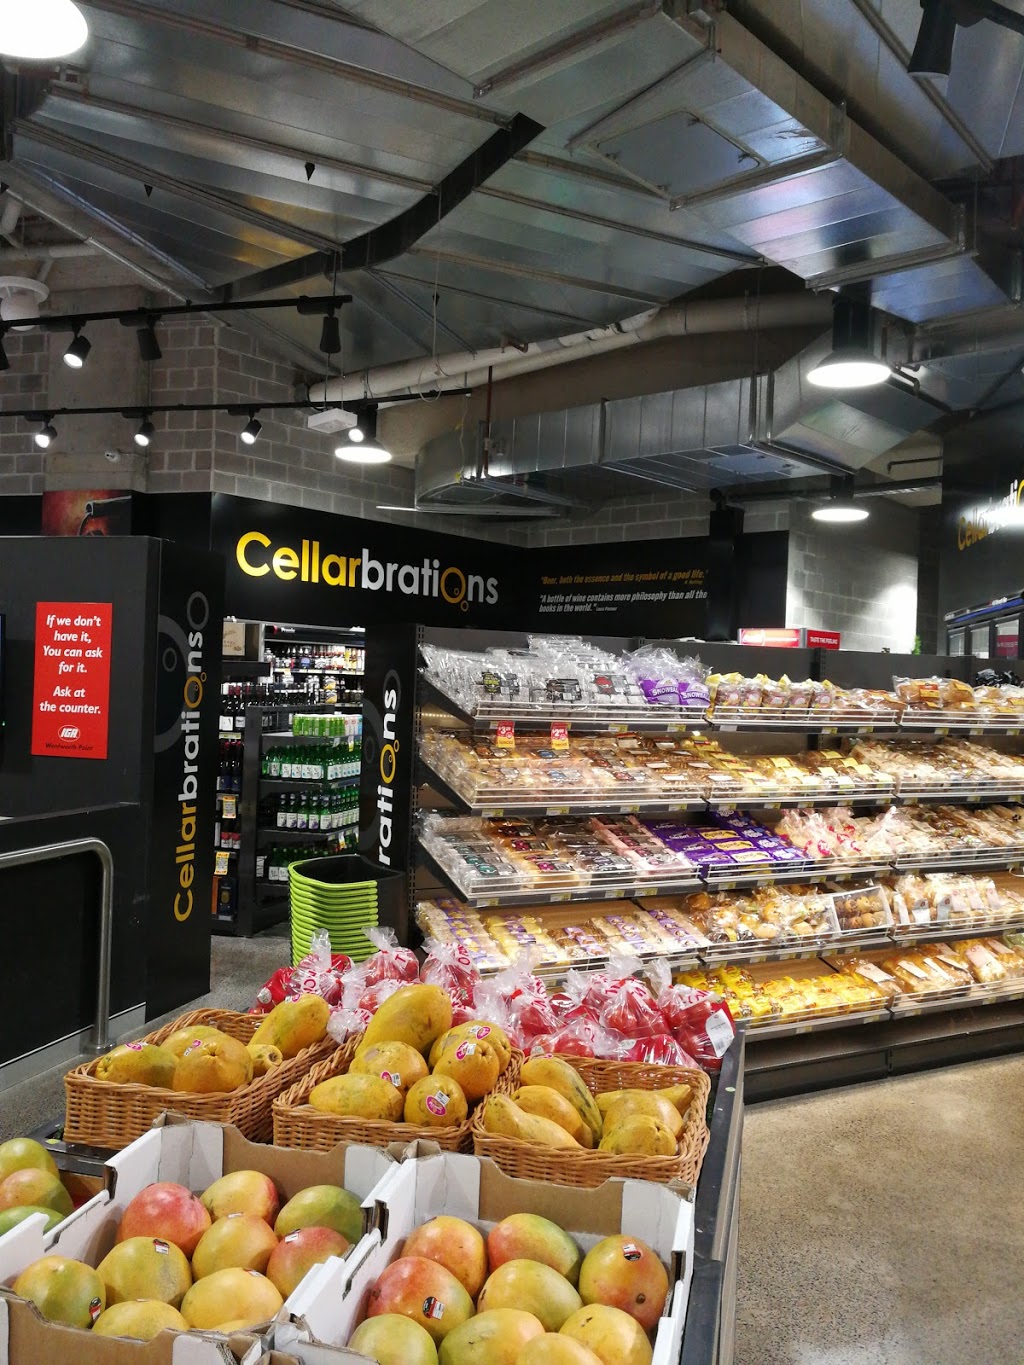 IGA Market Central Wentworth Point | supermarket | Crn Hill Rd &, Shop 1/1 Burroway Rd, Wentworth Point NSW 2127, Australia | 0290719010 OR +61 2 9071 9010